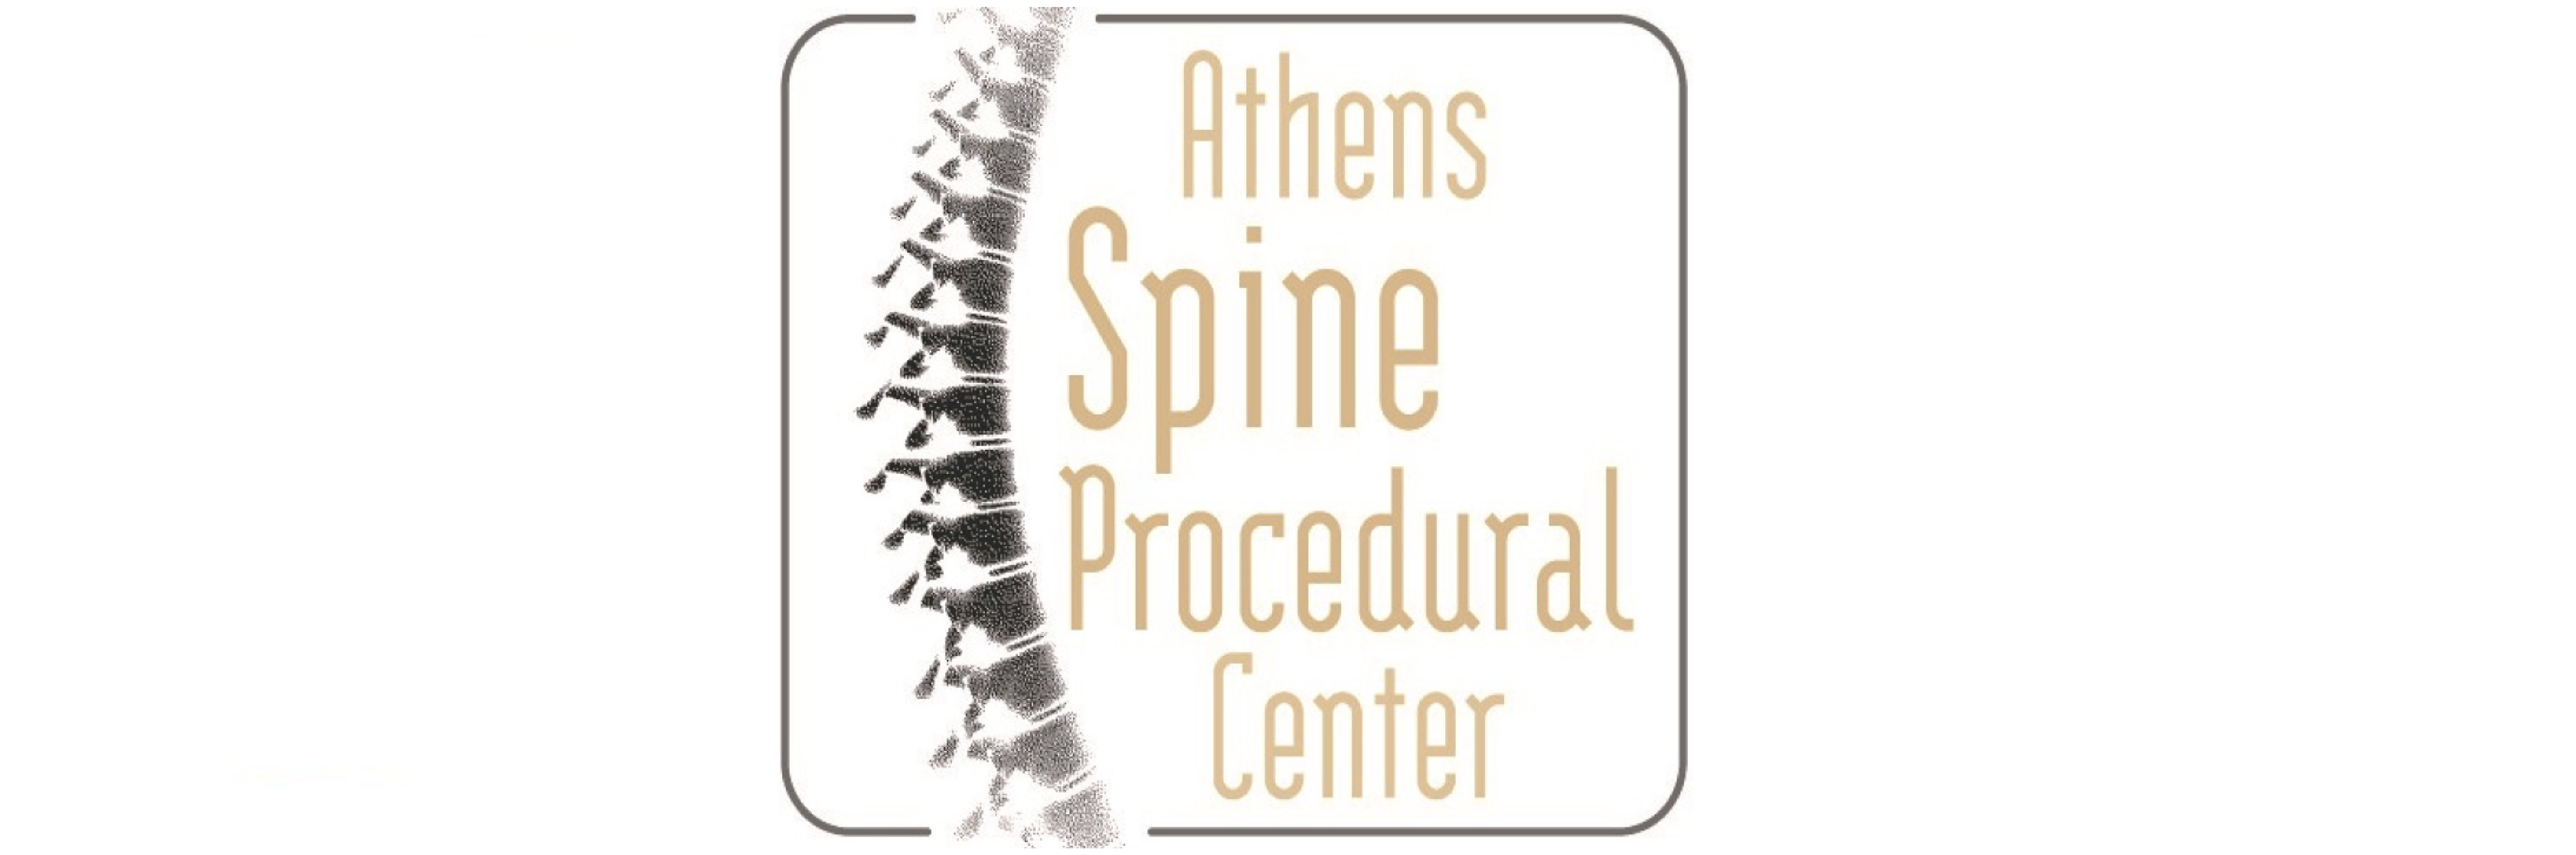 Athens Spine Procedural Center